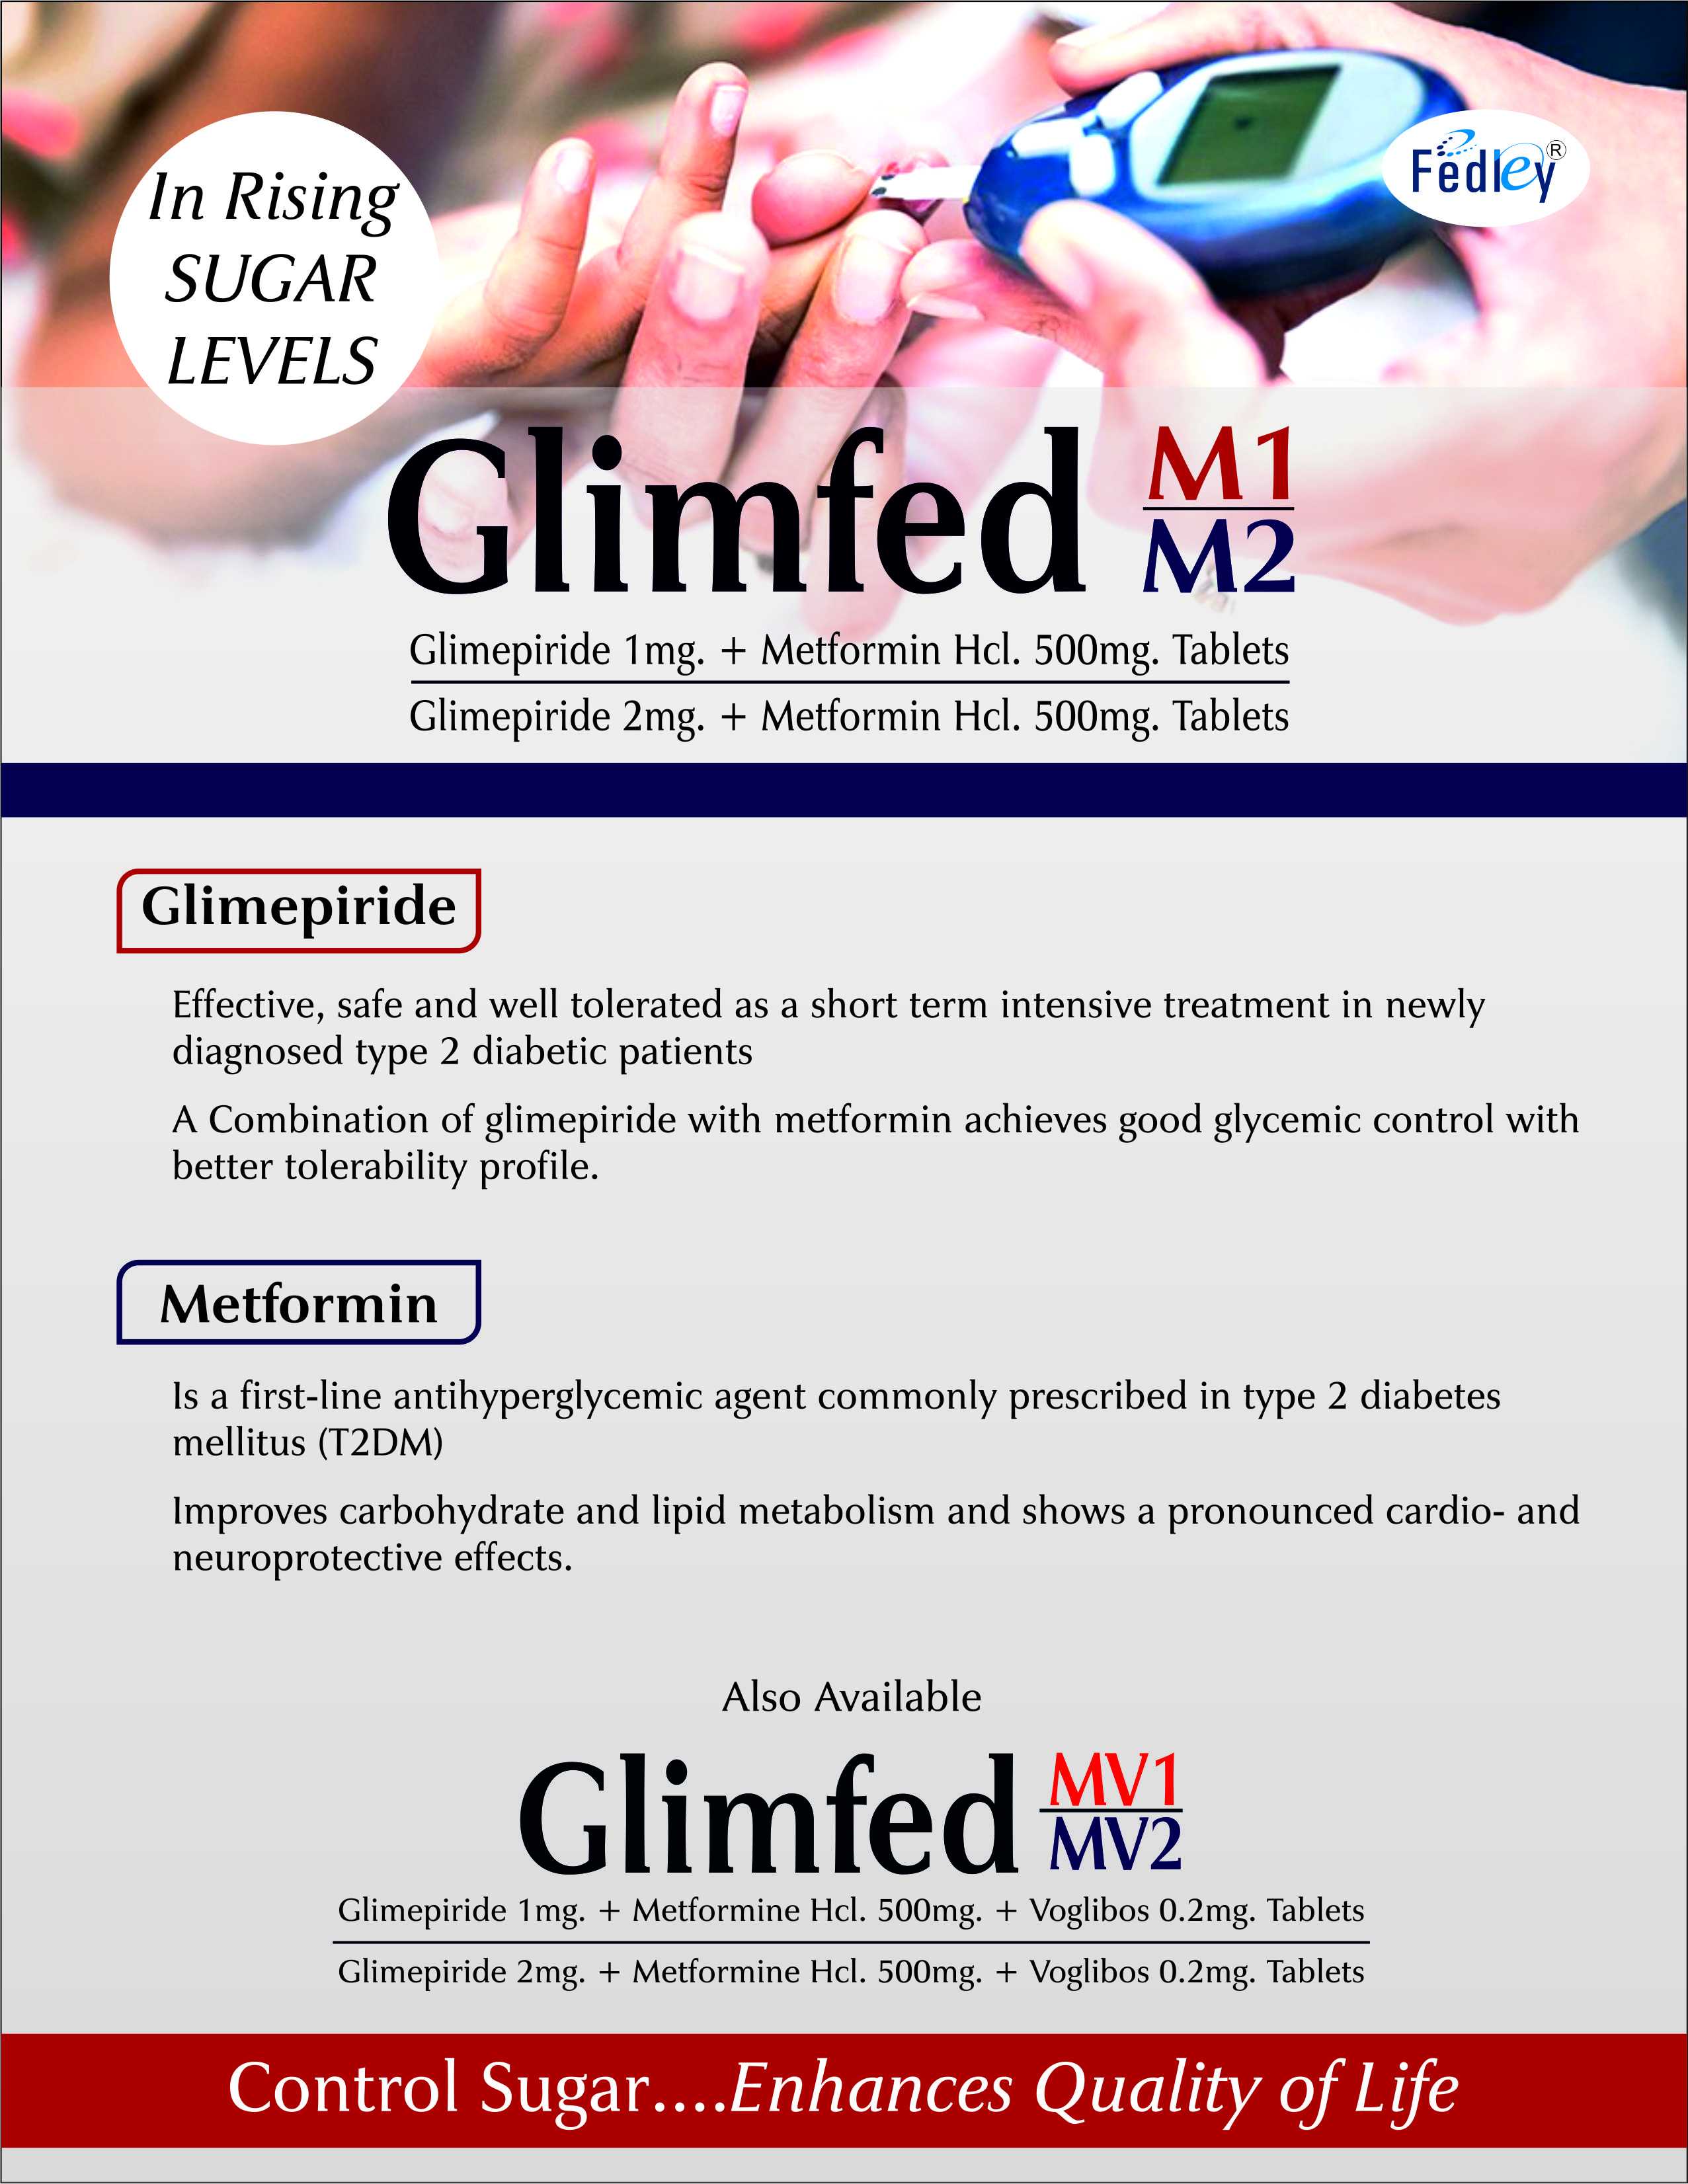 GLIMFED-M2